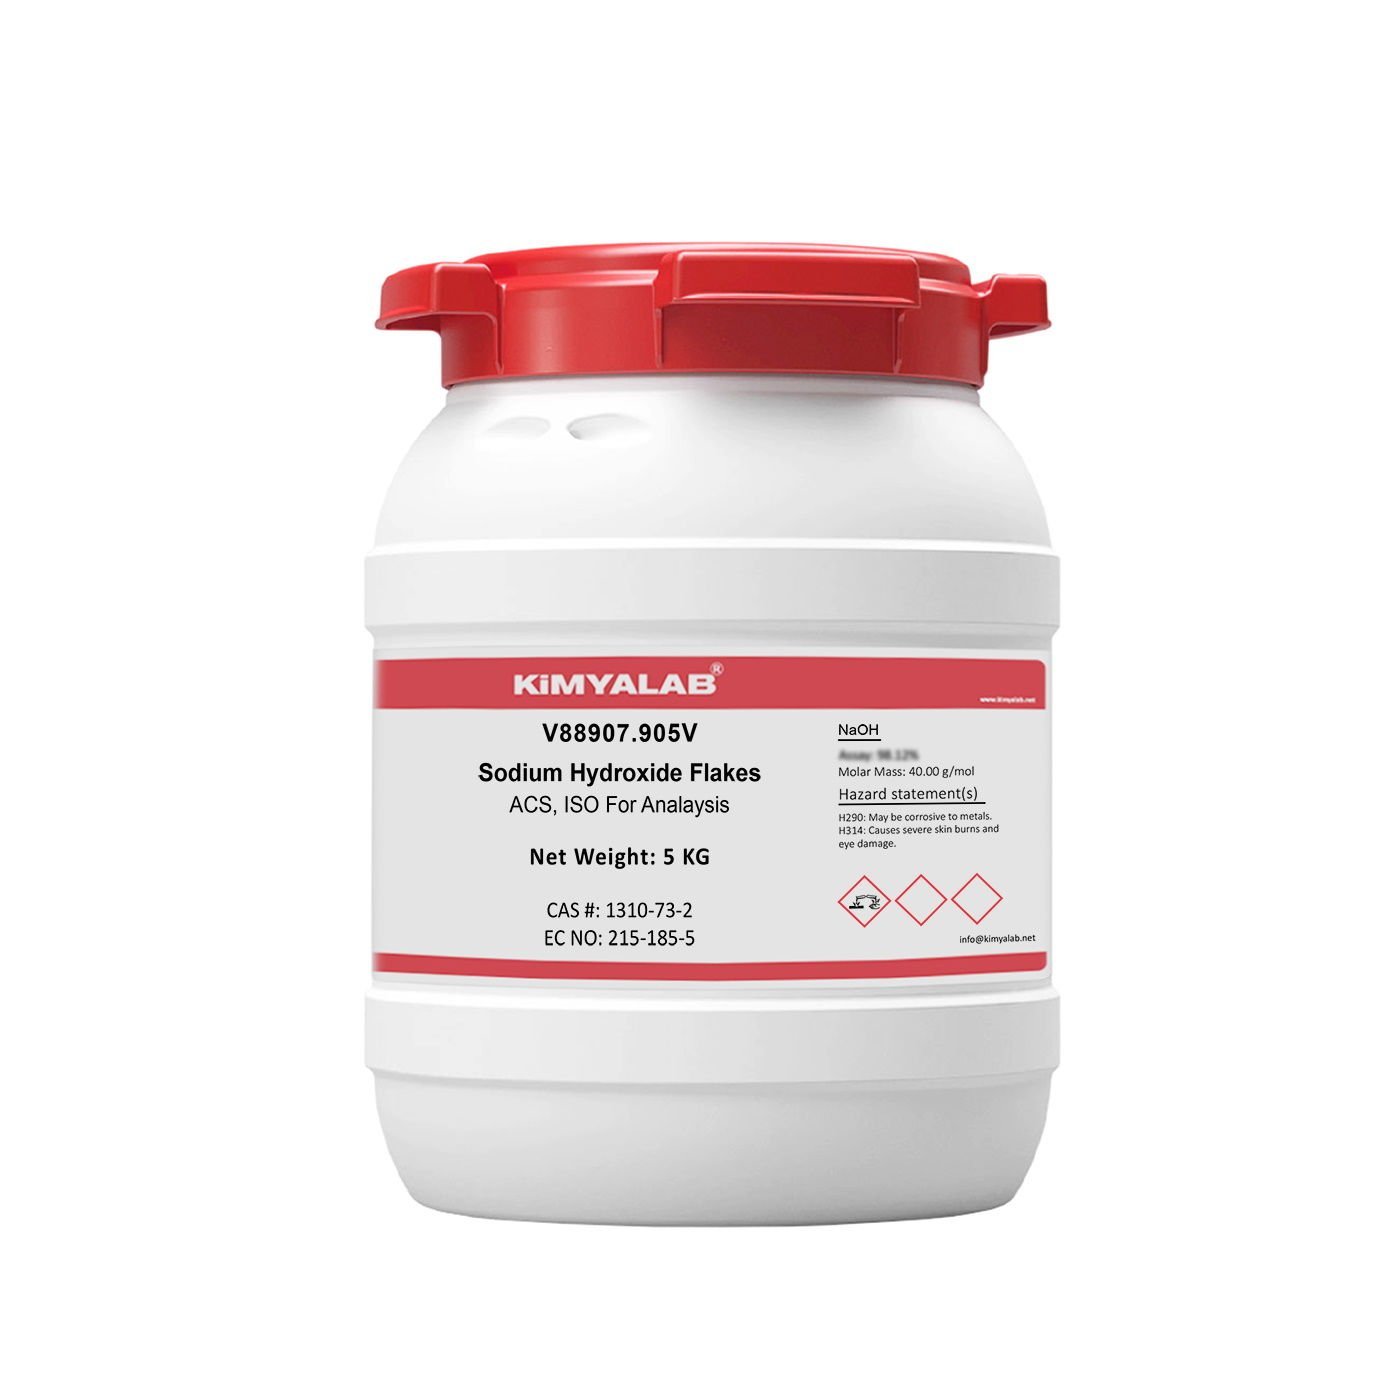 Kimyalab Sodyum Hidroksit Payet - Kostik - Sodium Hydroxide Flakes - 5 Kg-HDPE Varil